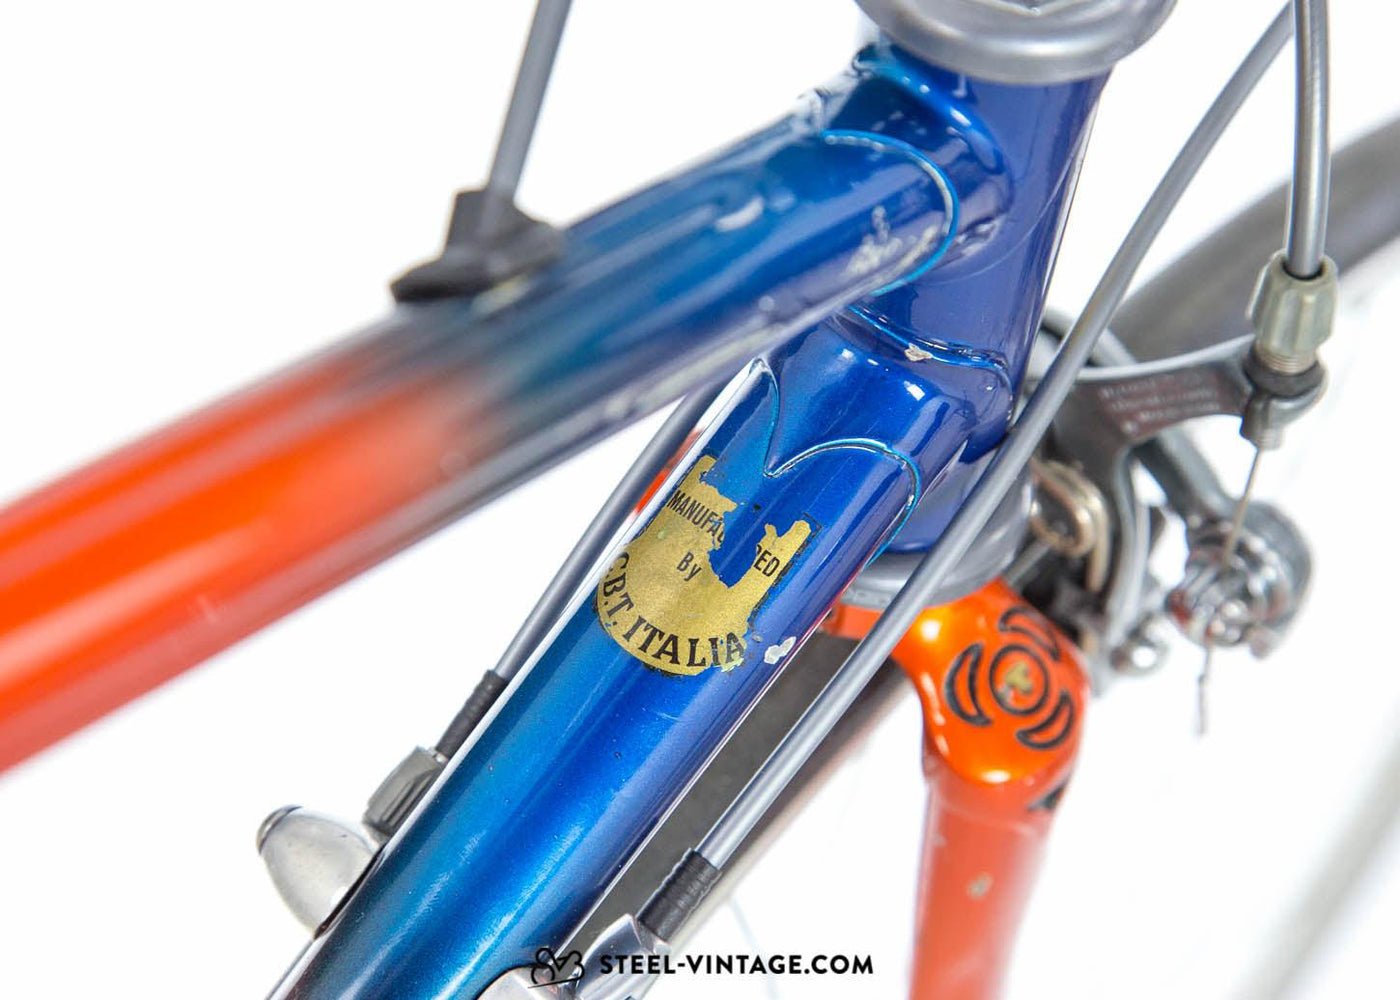 CBT Italia Classic Racing Bike 1990s - Steel Vintage Bikes